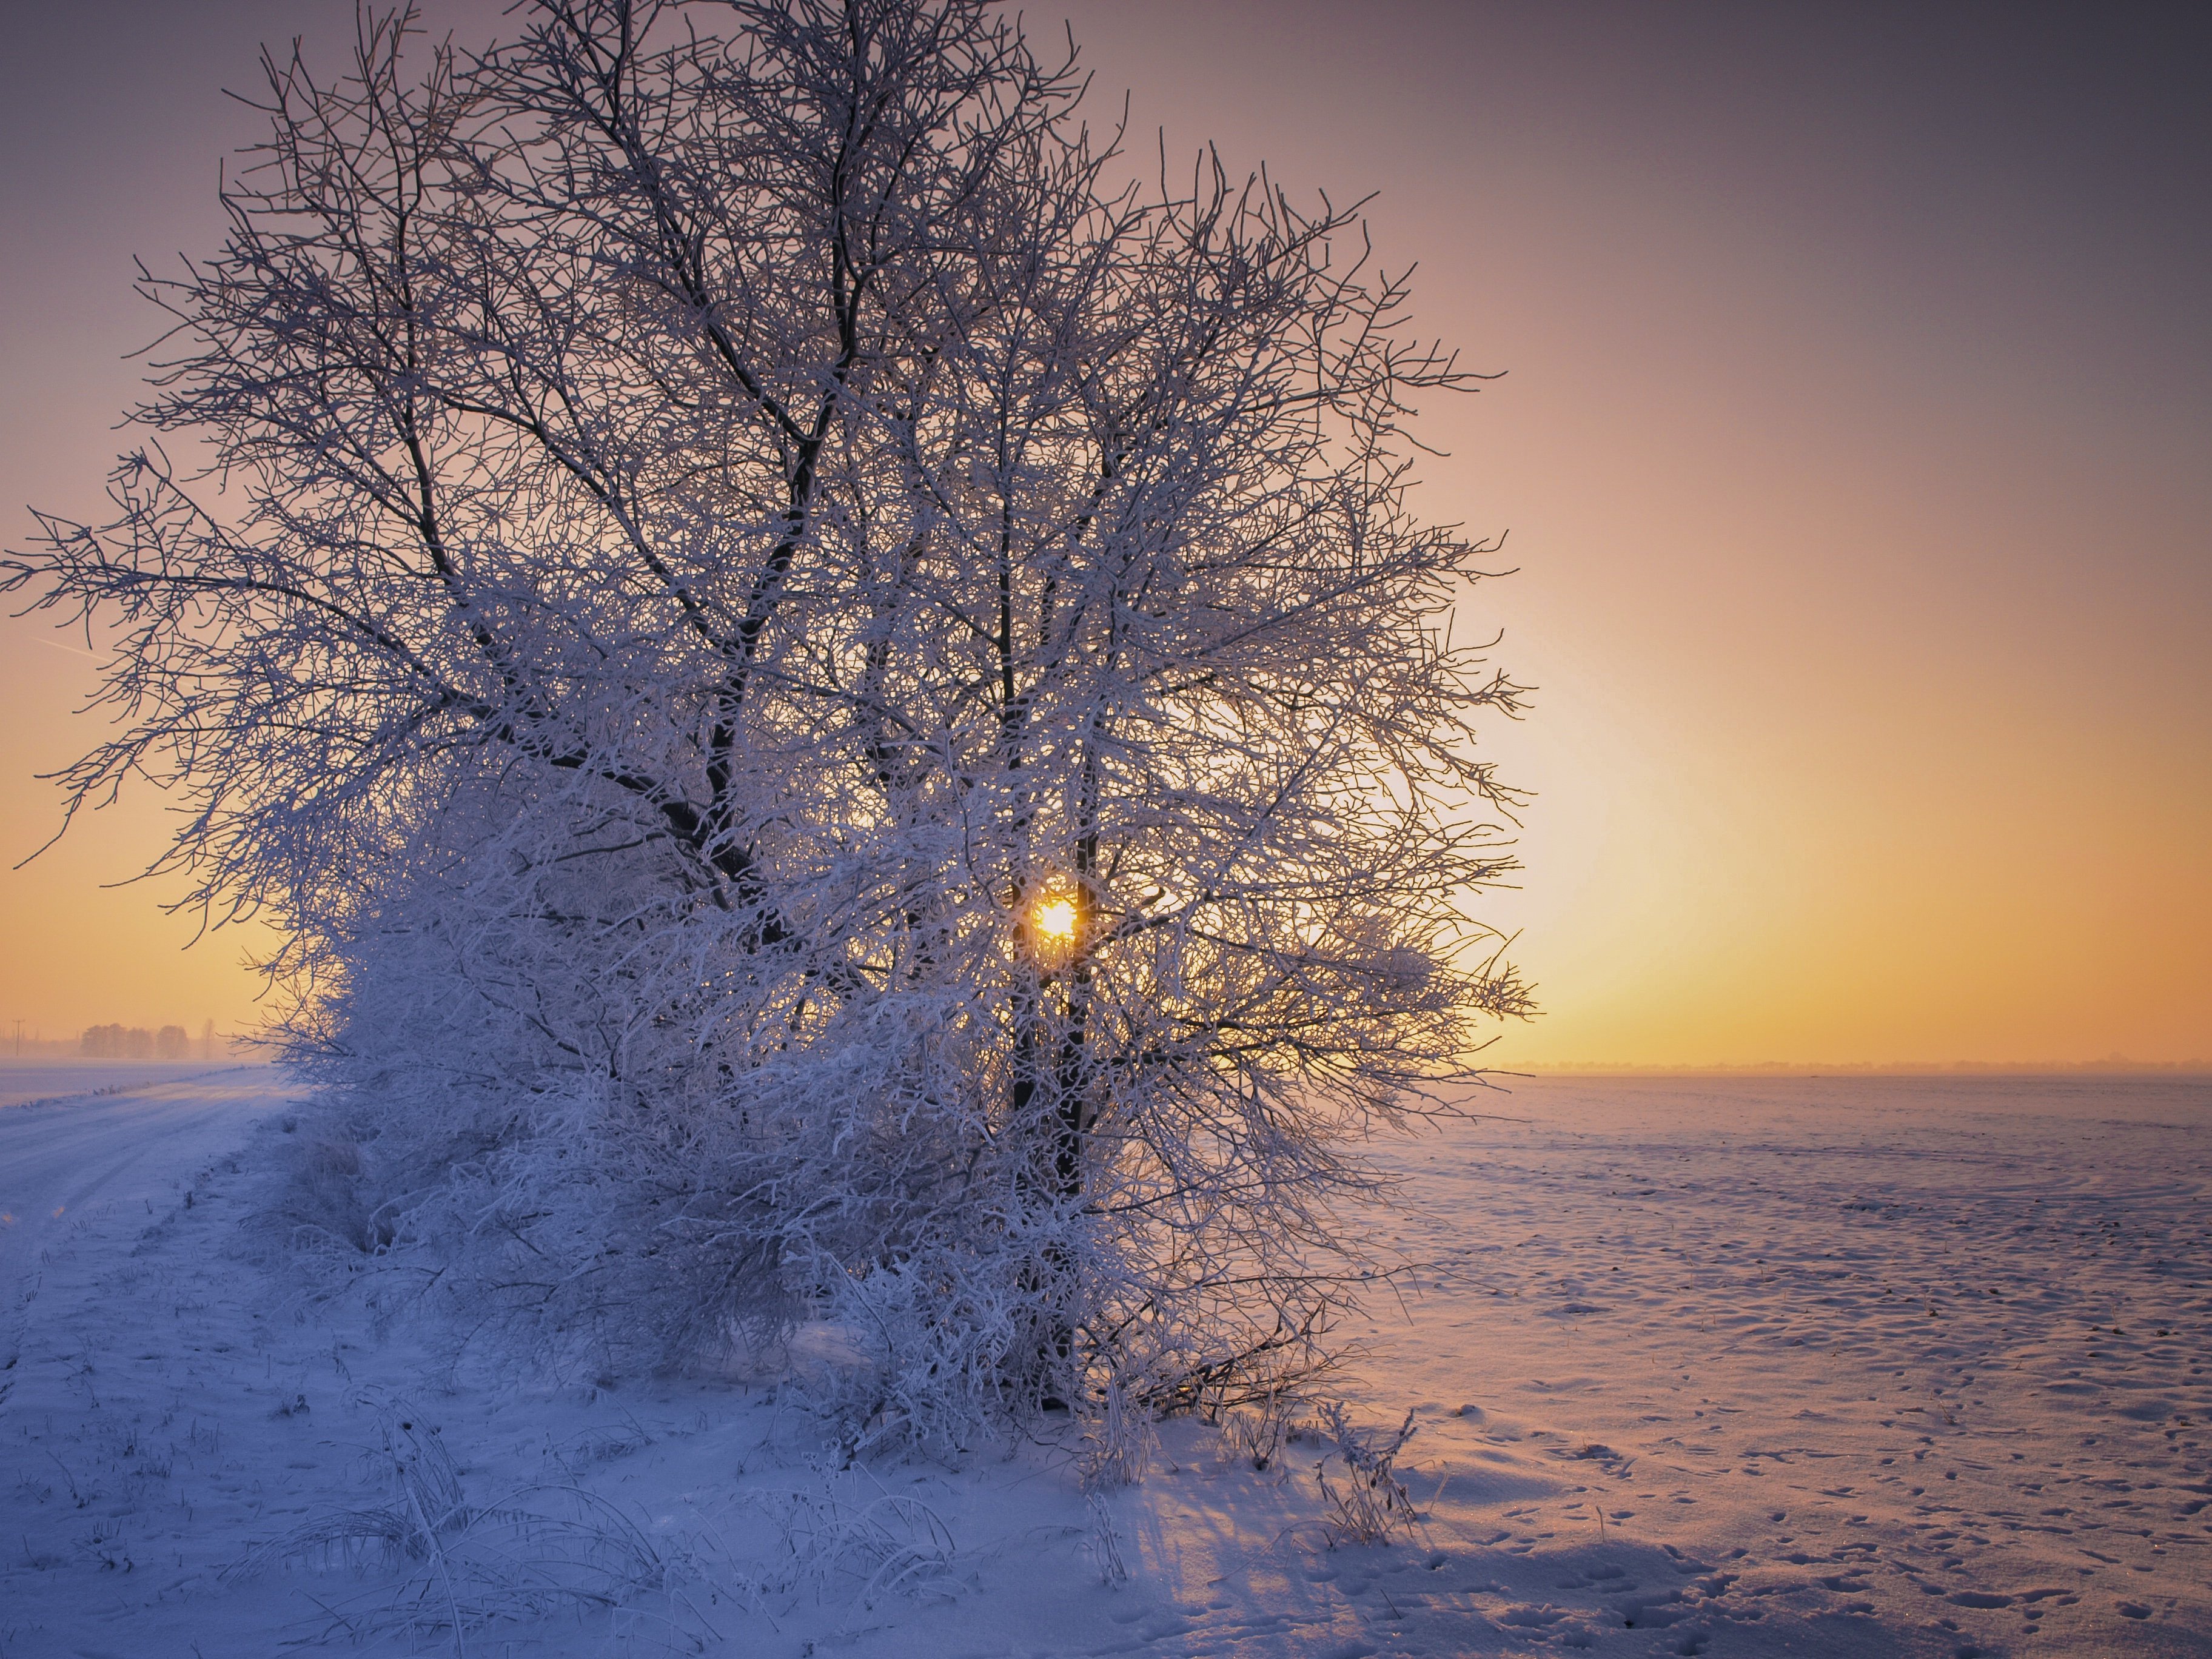 Звуки природы зимой. Солнце зимой. Зимний пейзаж. Зимнее утро. Солнечное зимнее утро.